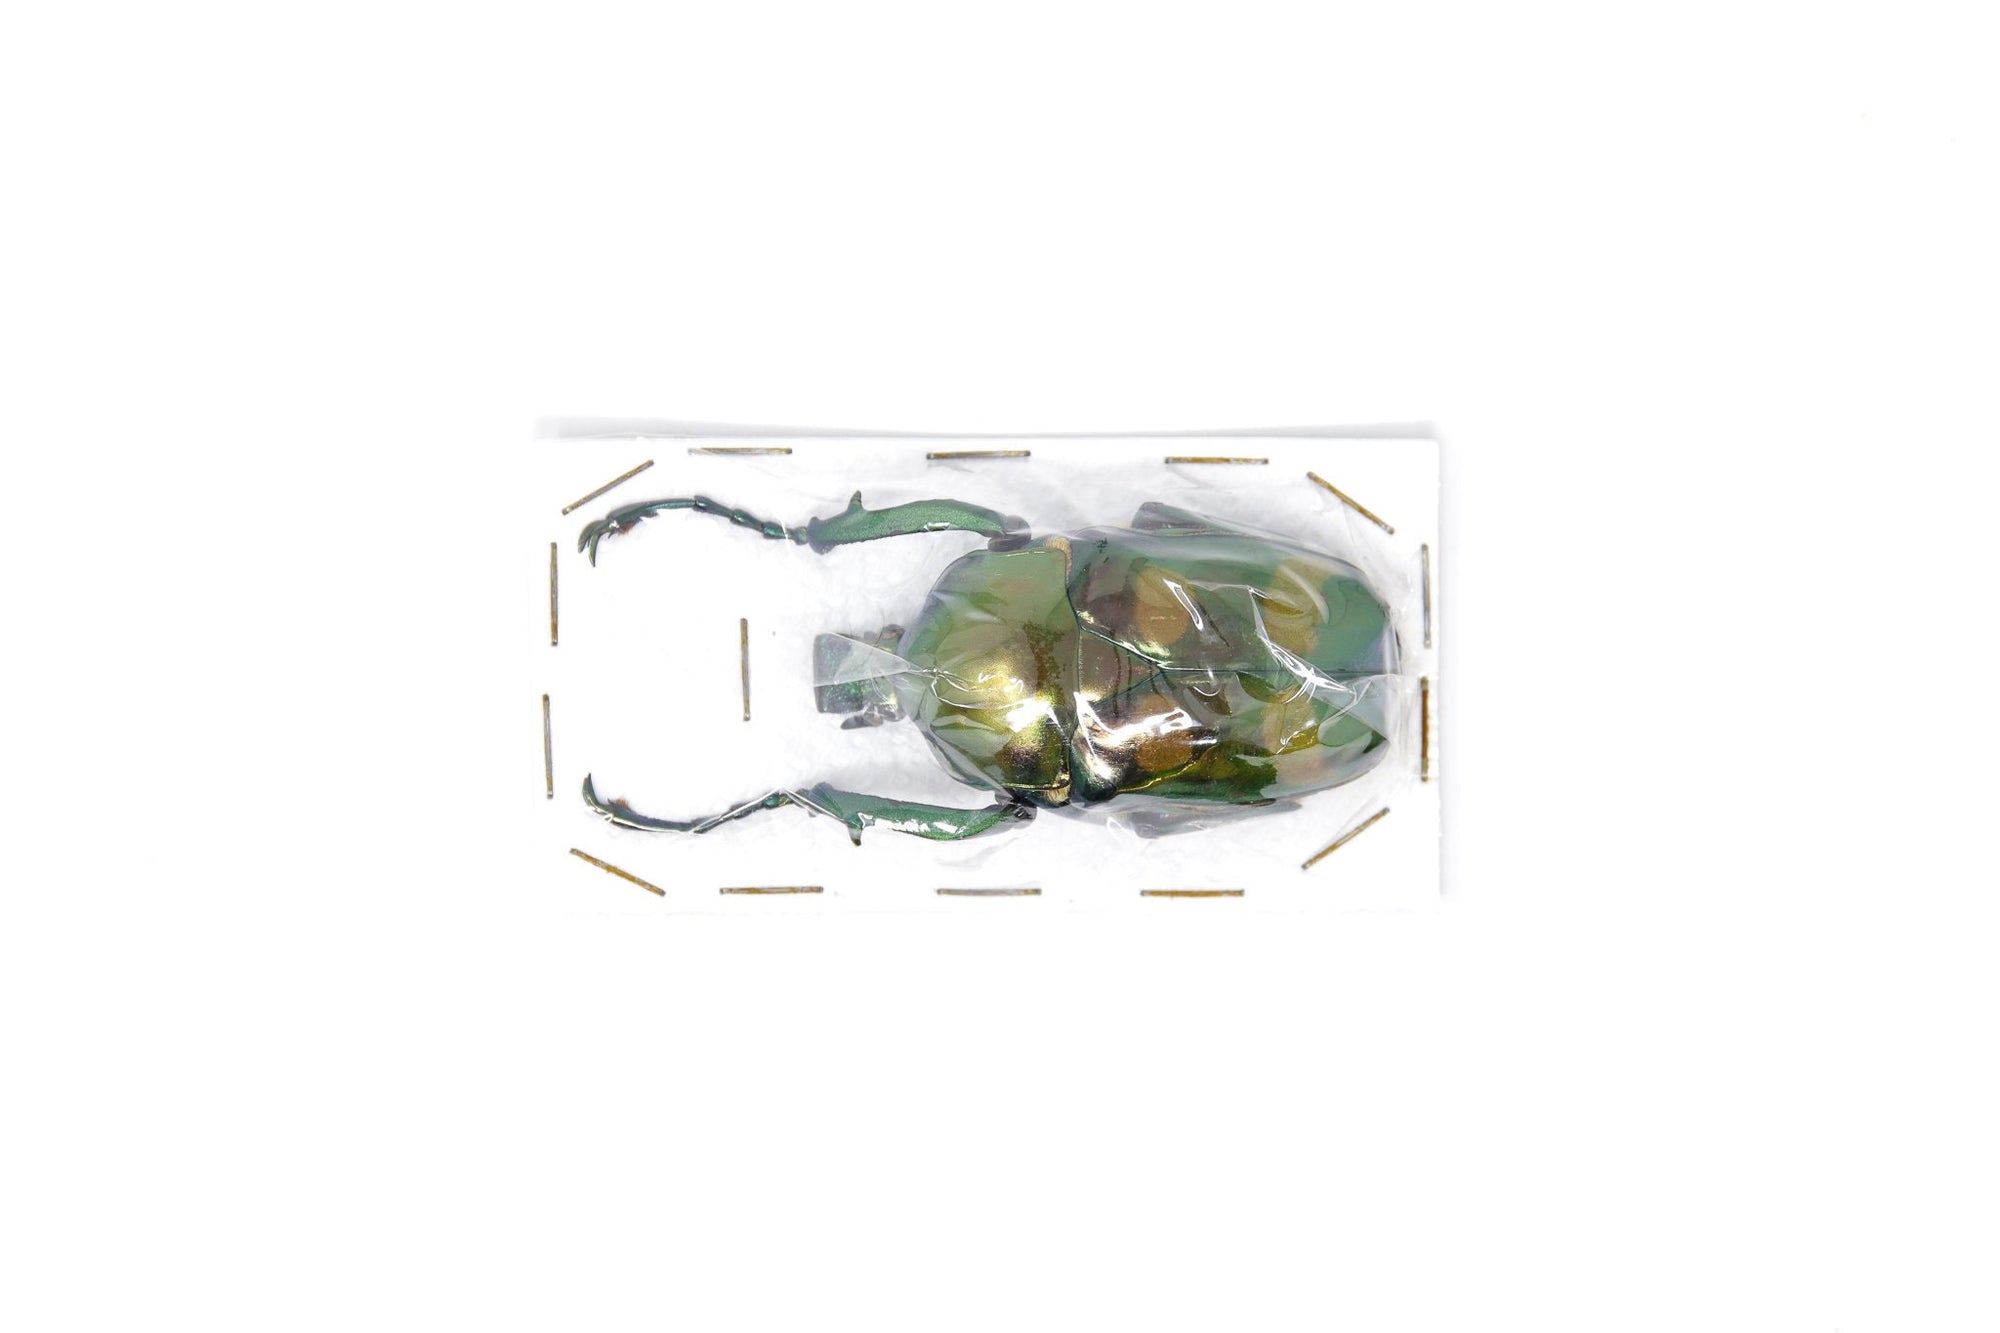 Jumnos ruckeri ruckeri 51.6mm A1 | Thailand Green Flower Beetle, Entomology Specimen